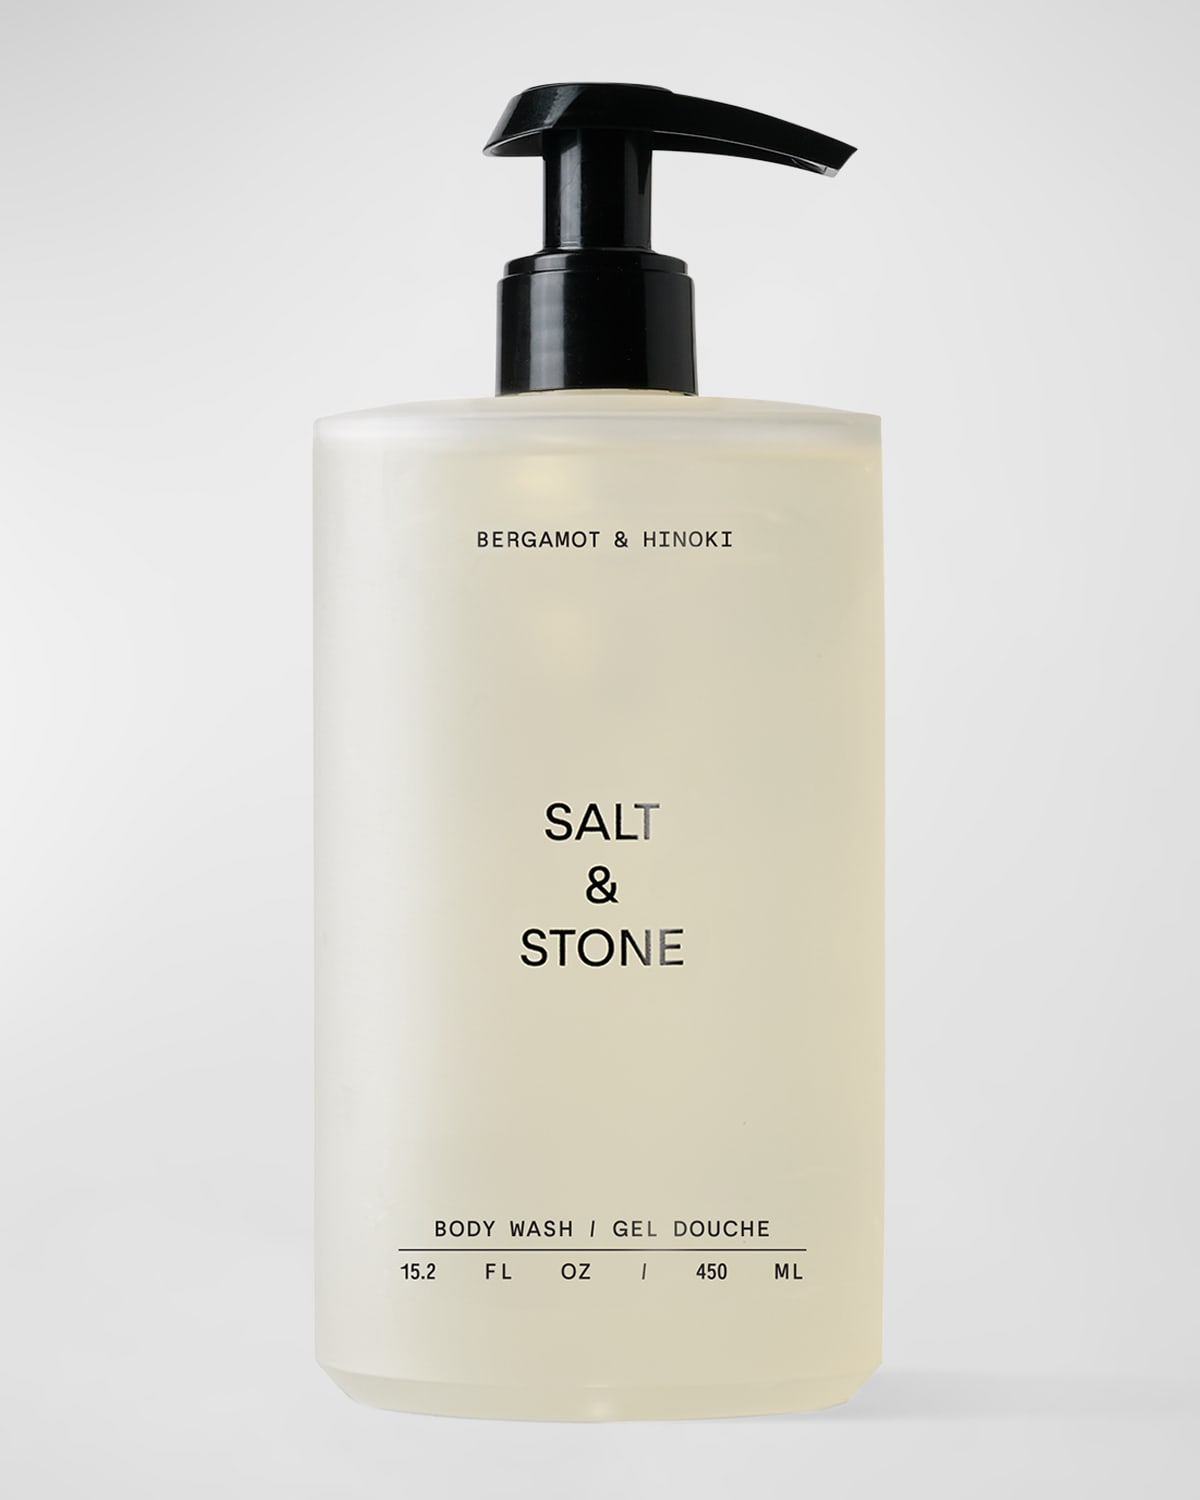 Shop Salt & Stone Bergamot & Hinoki Body Wash